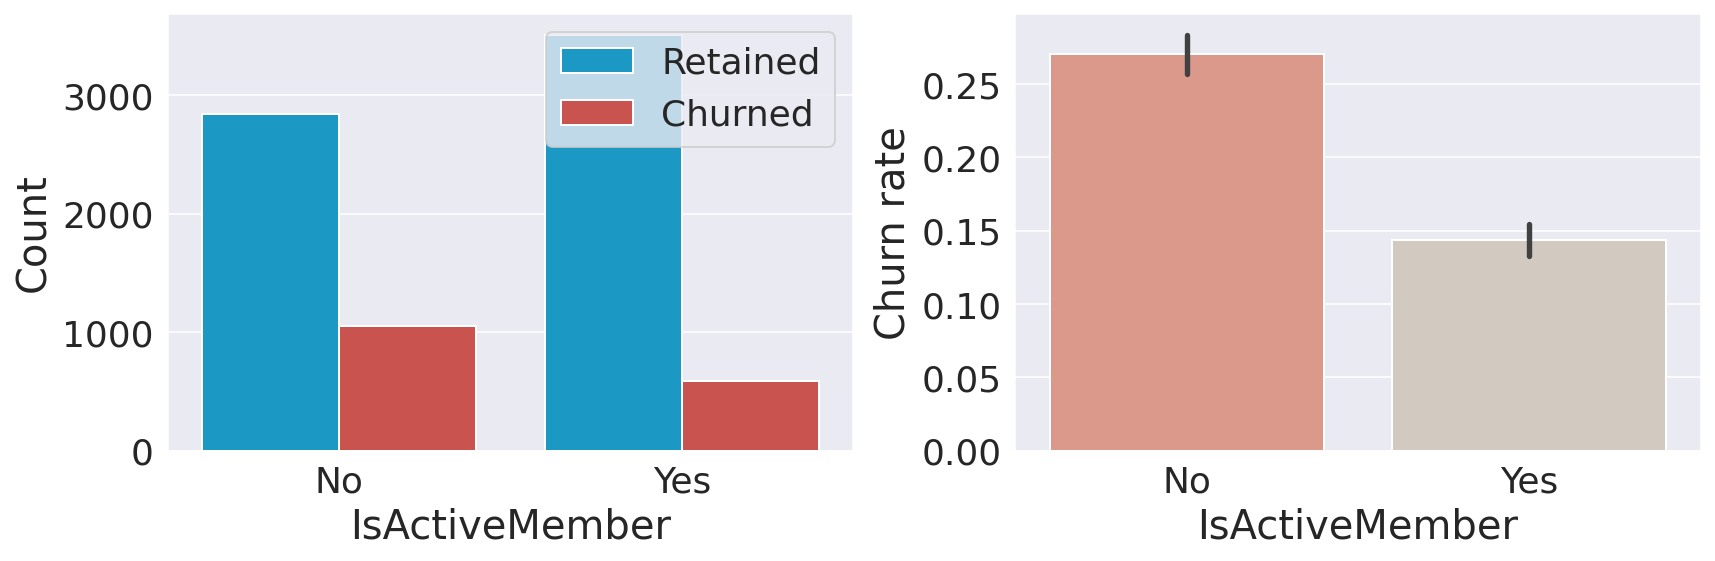 Customer Churn Prediction Using Machine Learning